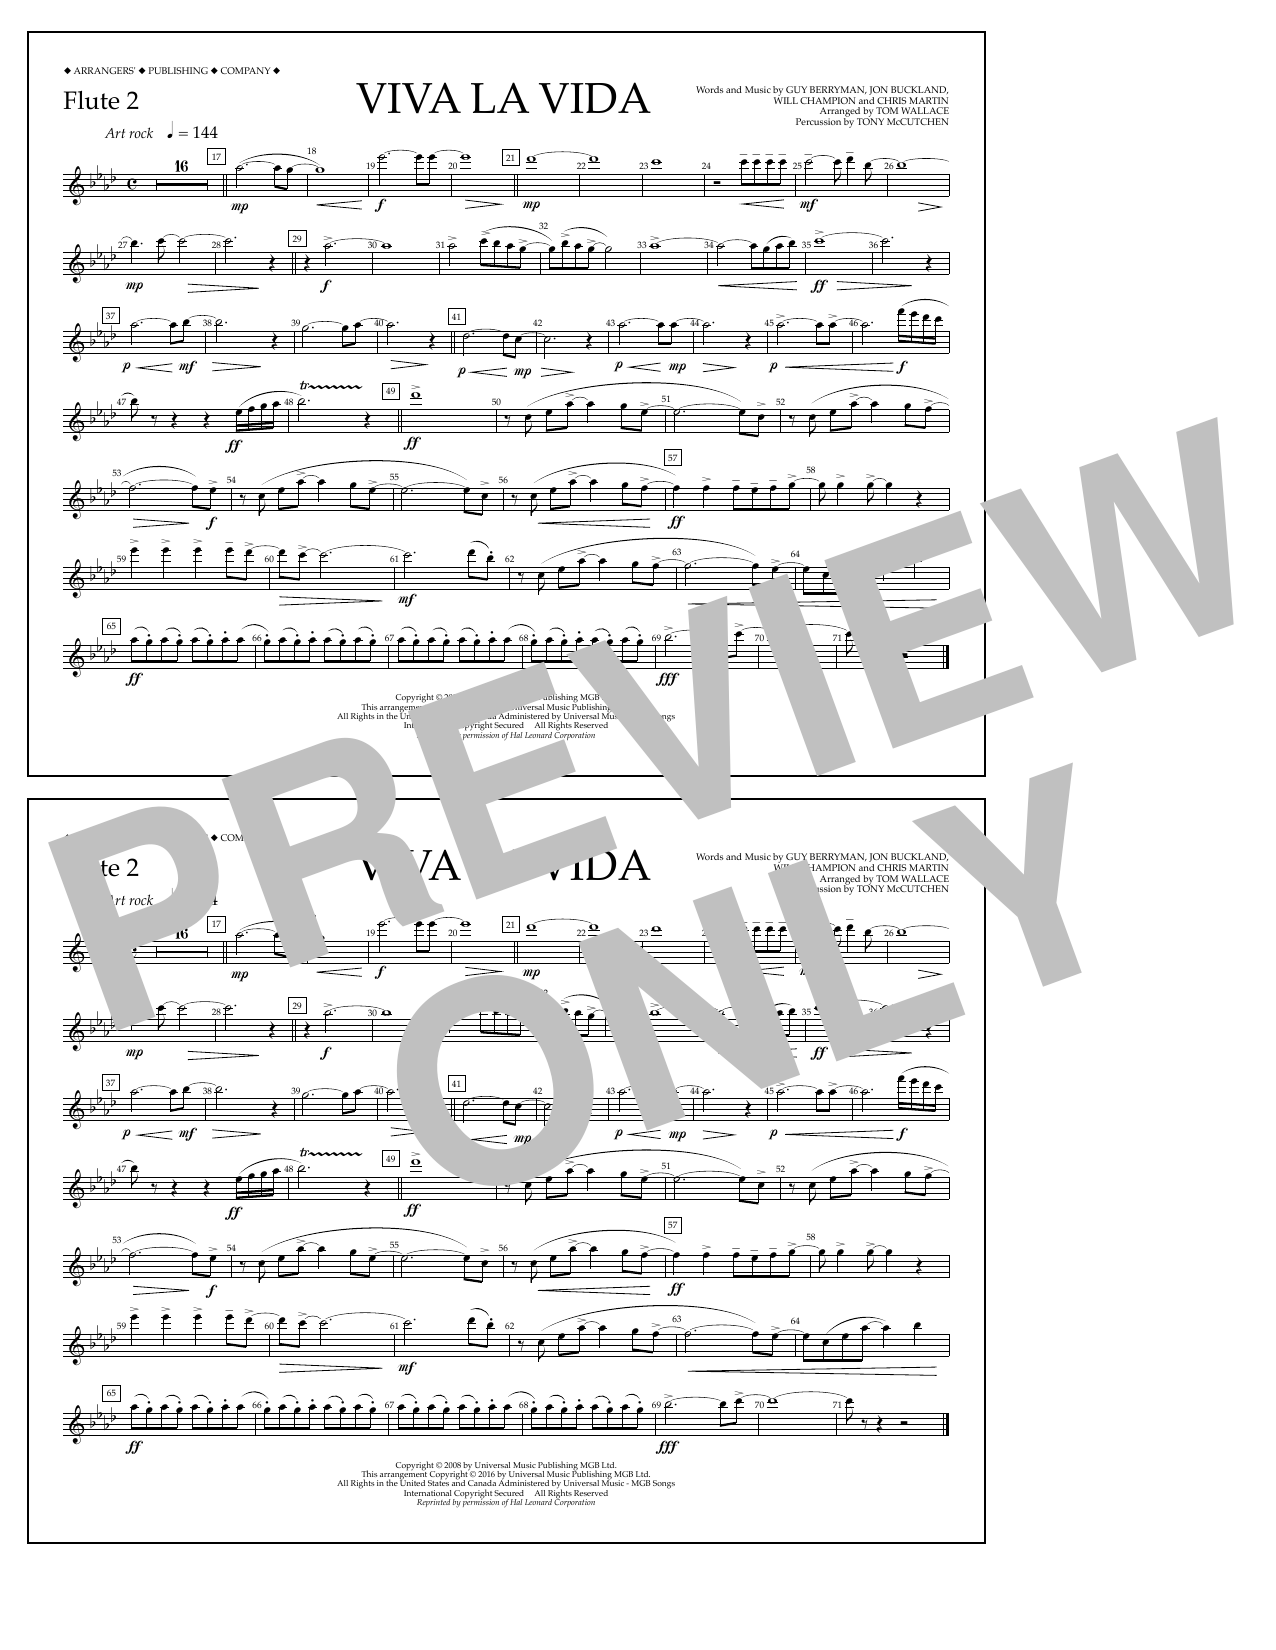 Tom Wallace Viva La Vida - Flute 2 Sheet Music Notes & Chords for Marching Band - Download or Print PDF